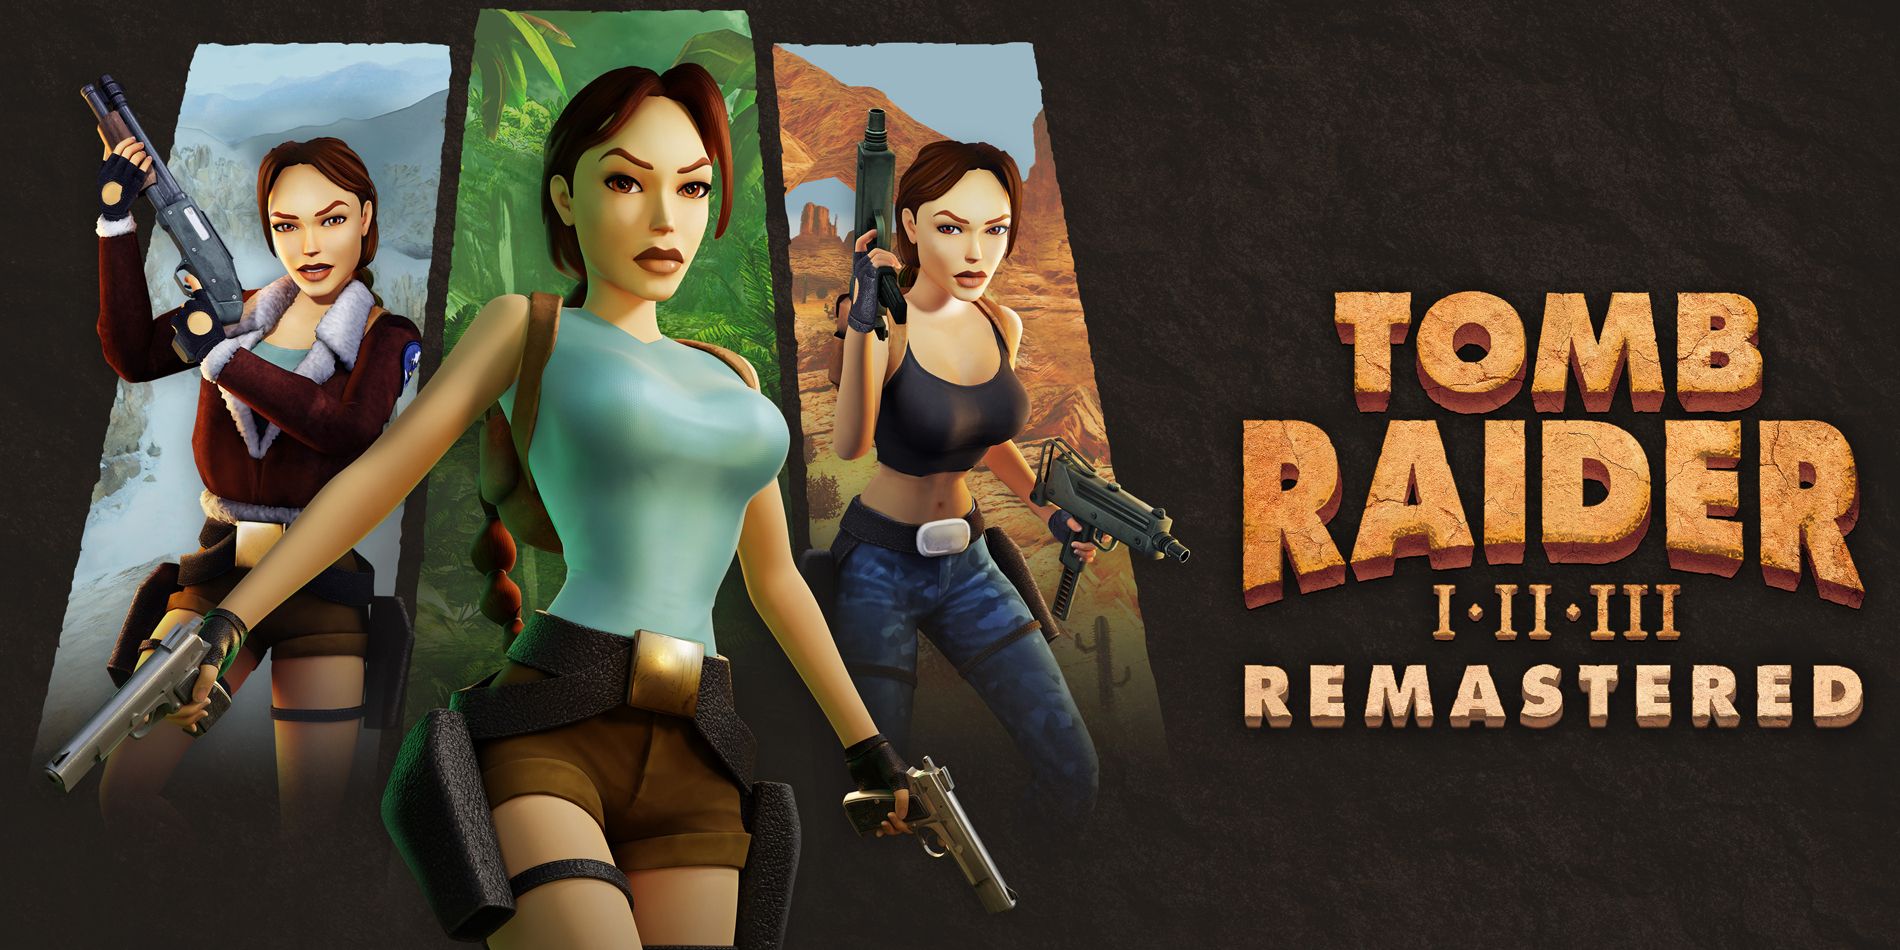 Tomb Raider Remastered I - III cover art